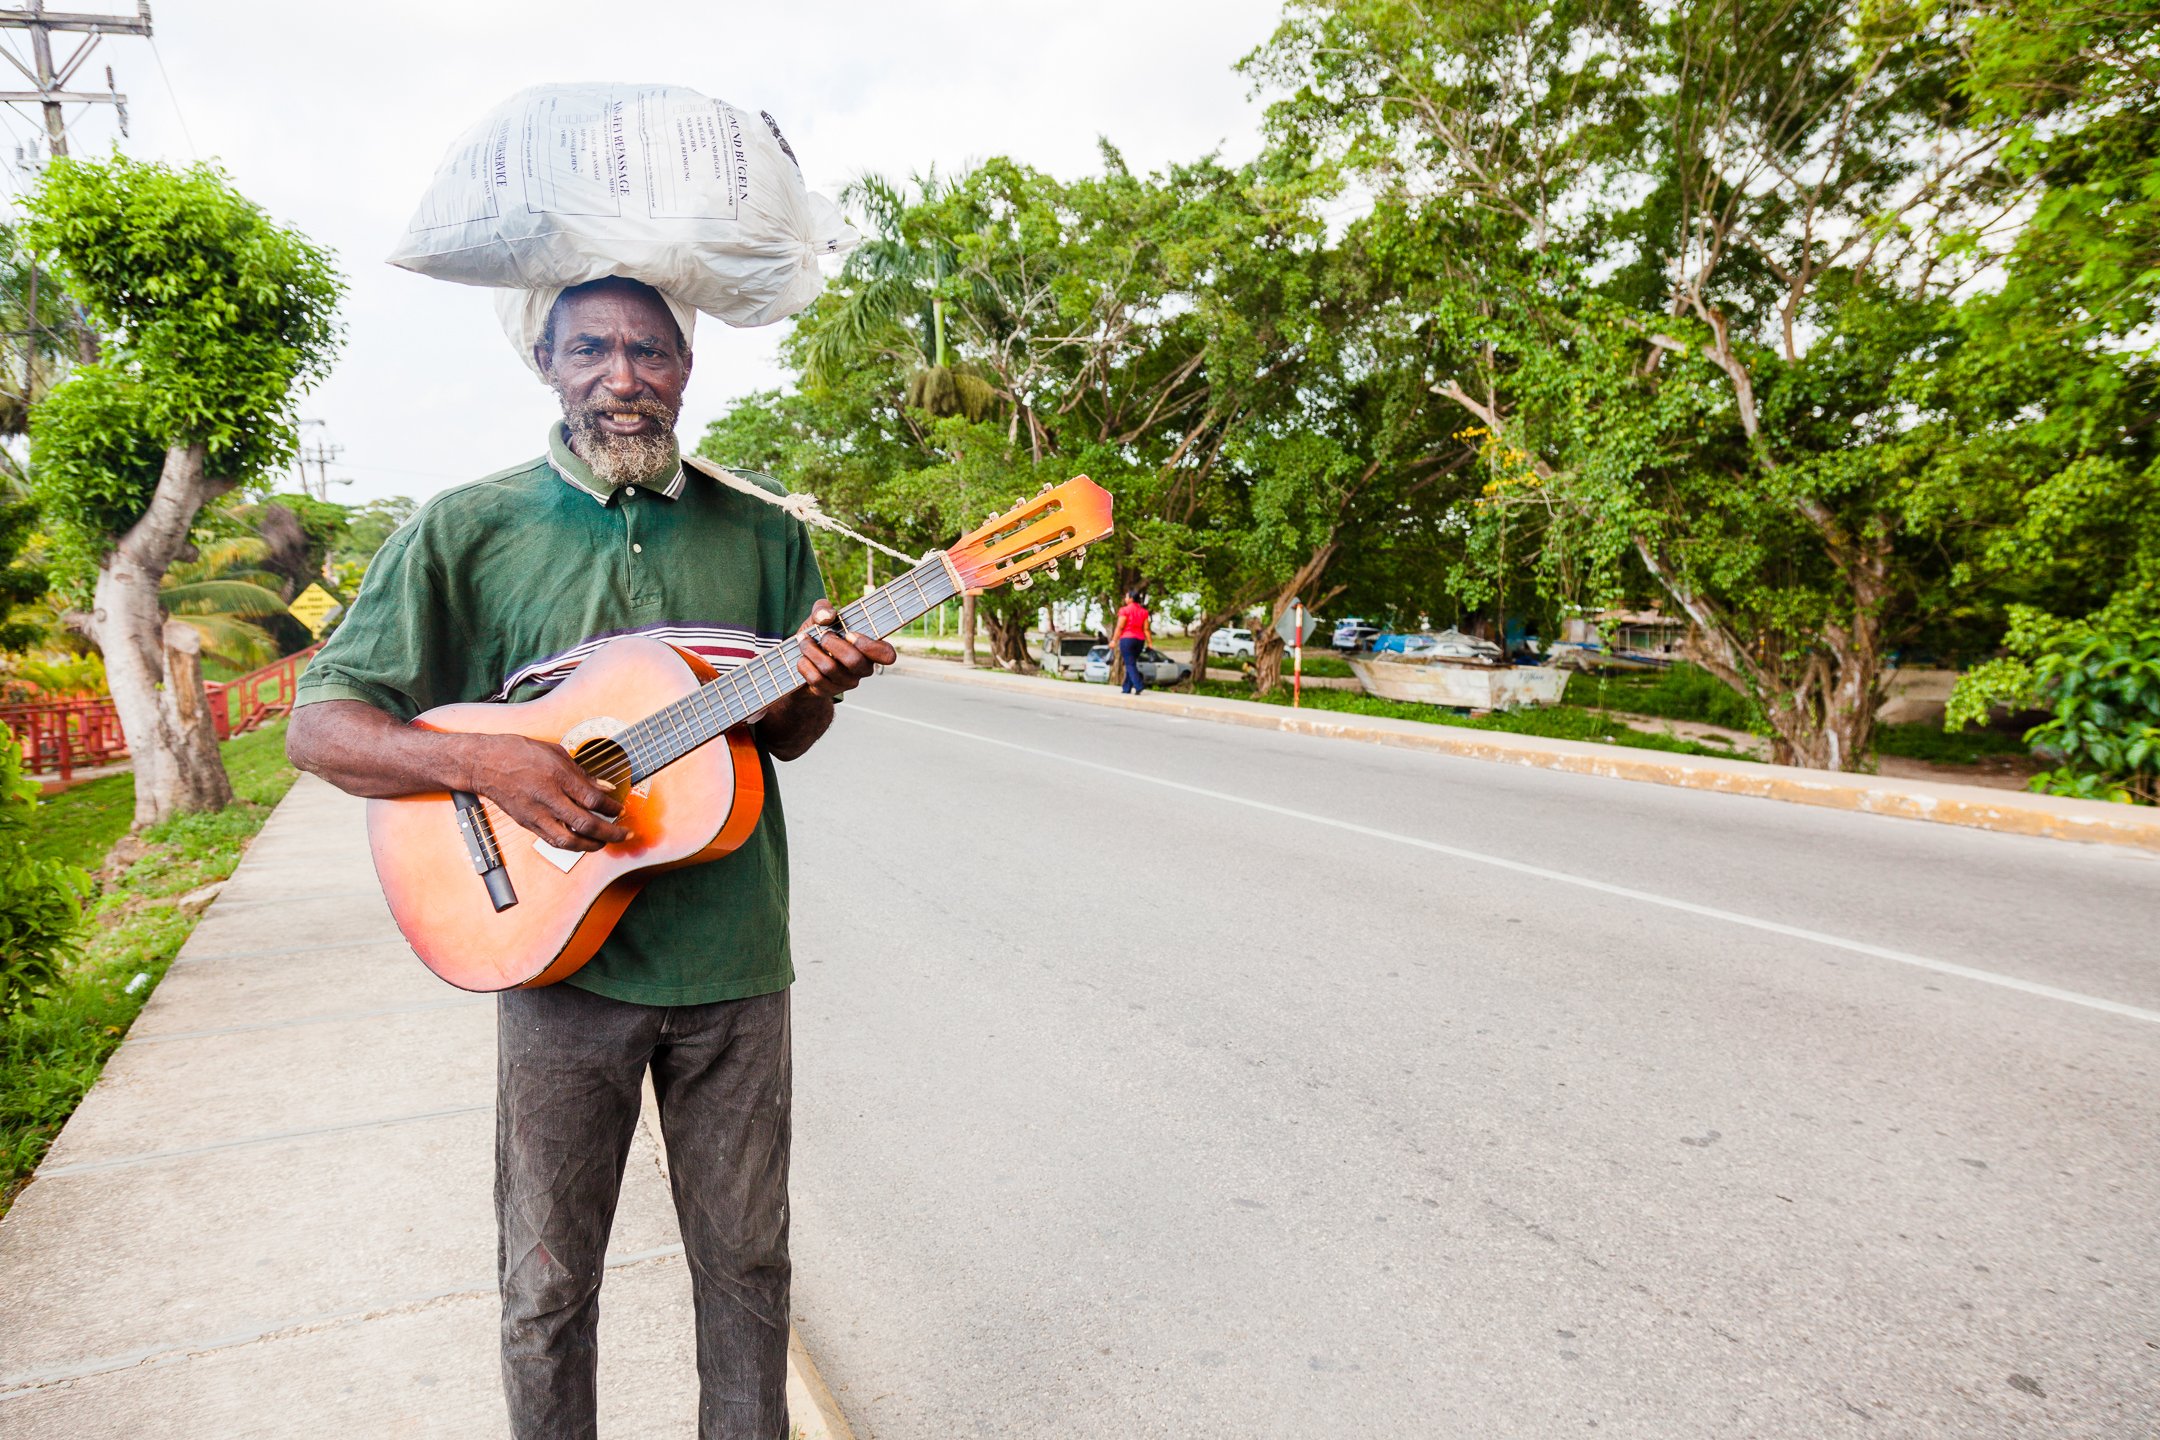  A man and his soft sound, Negril, Jamaica, 2014  © Laura Elo 